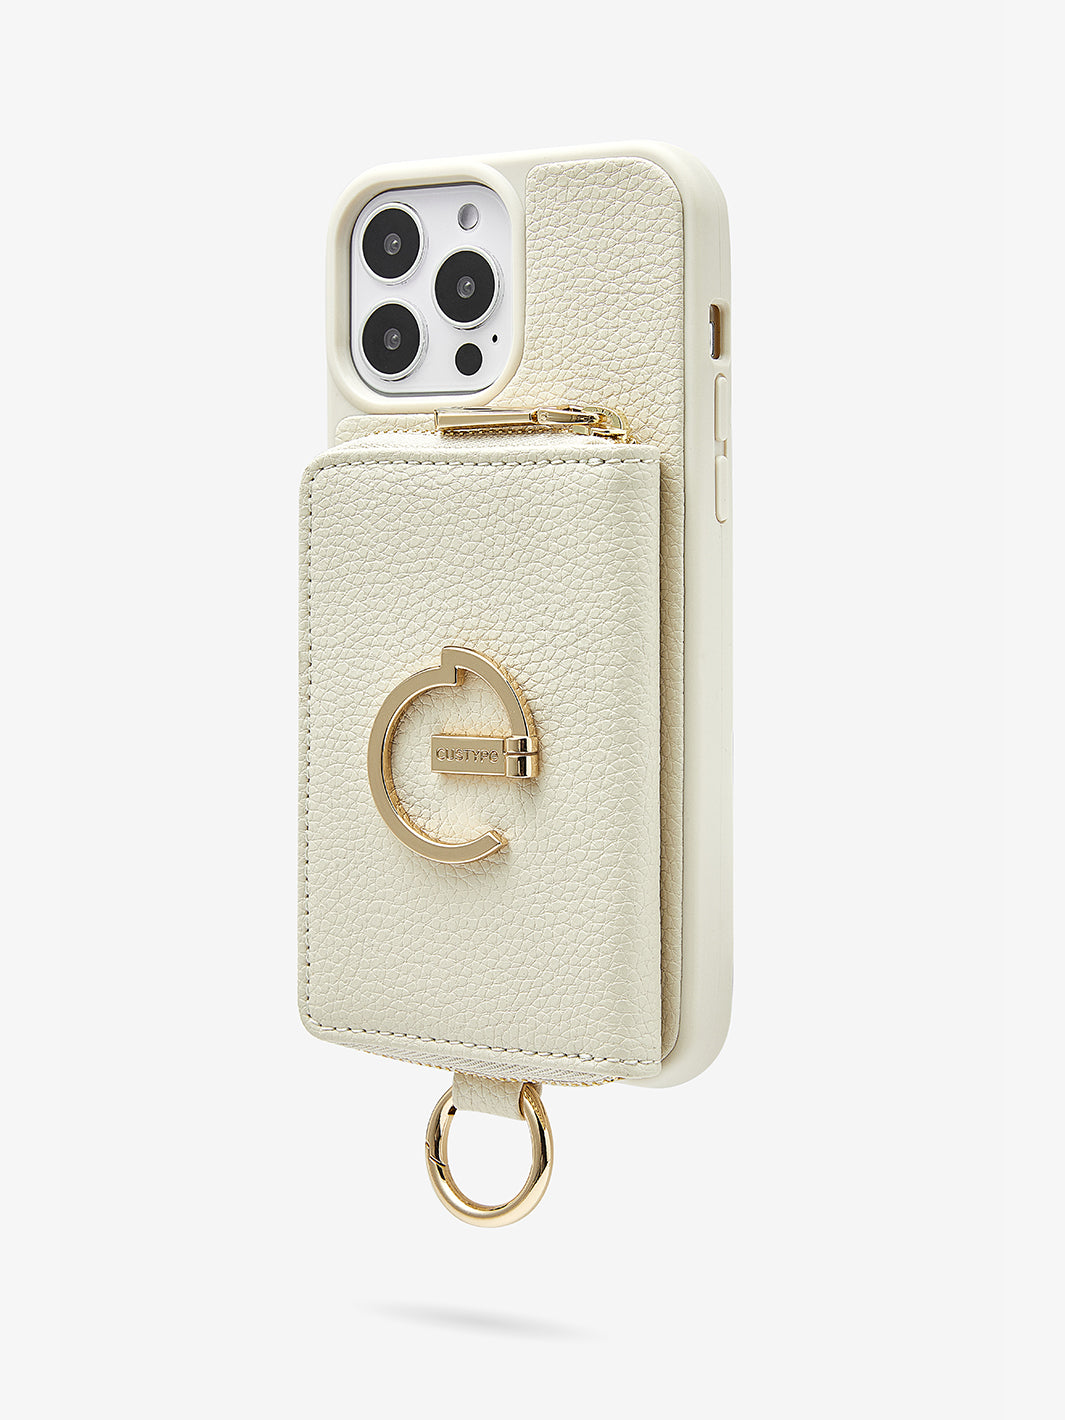 Custype Make Lifestyle-Silk iPhone Wallet Case in beige-5